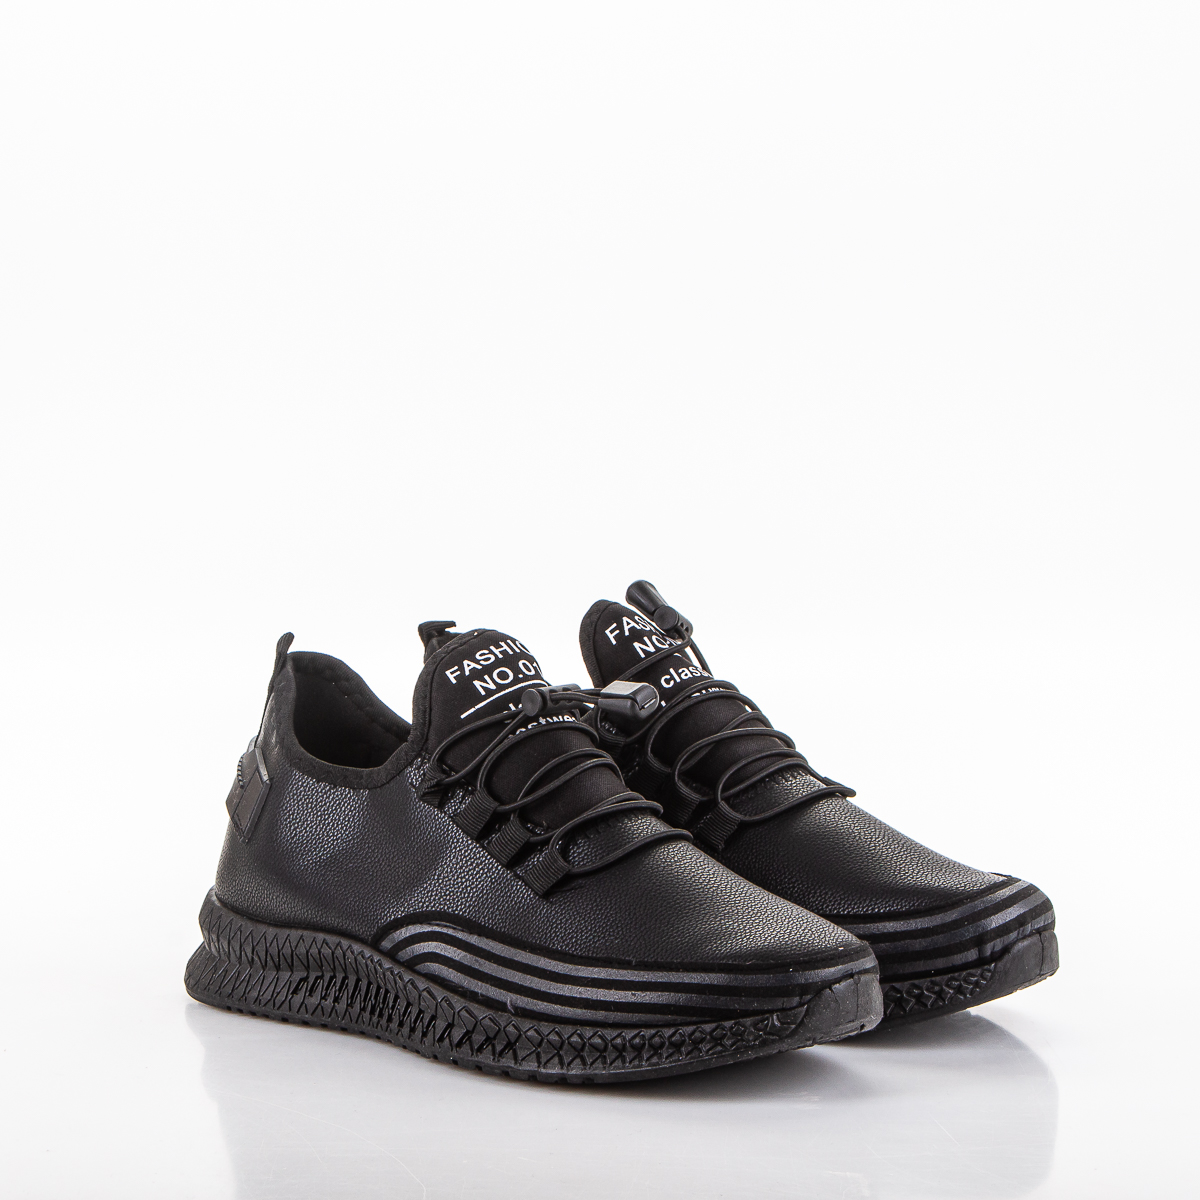 Фото Кроcсовки мужские J06 black купить на lauf.shoes